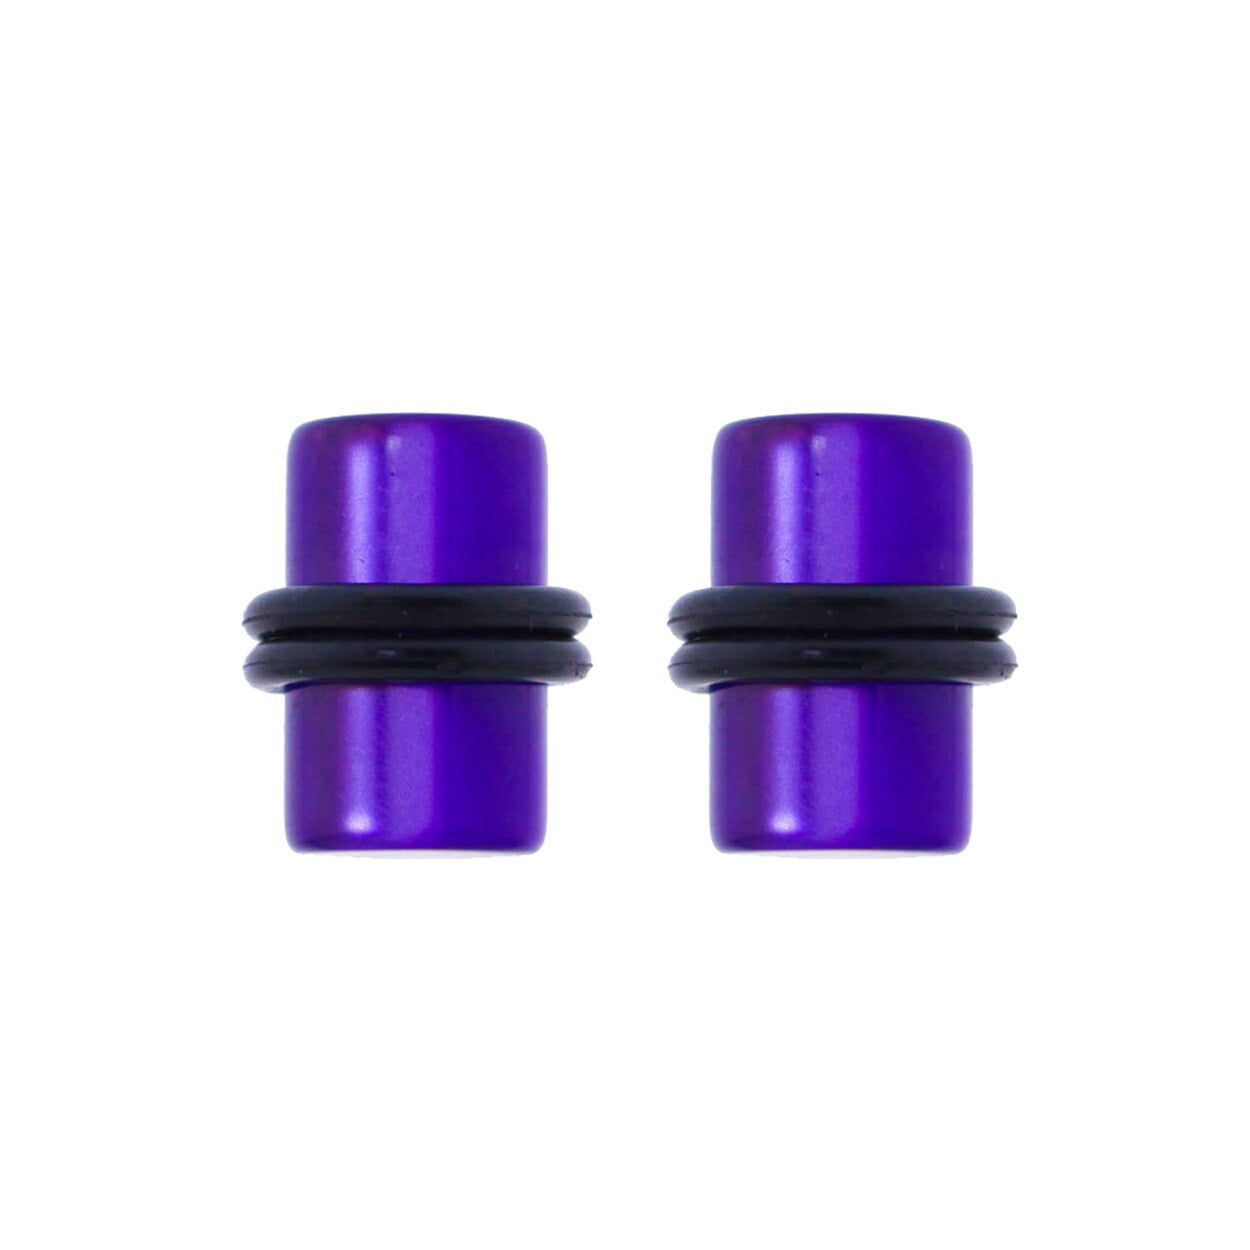 Sold as Pairs Light Purple Brilliant Sparkles Black Body Single Flared Plugs